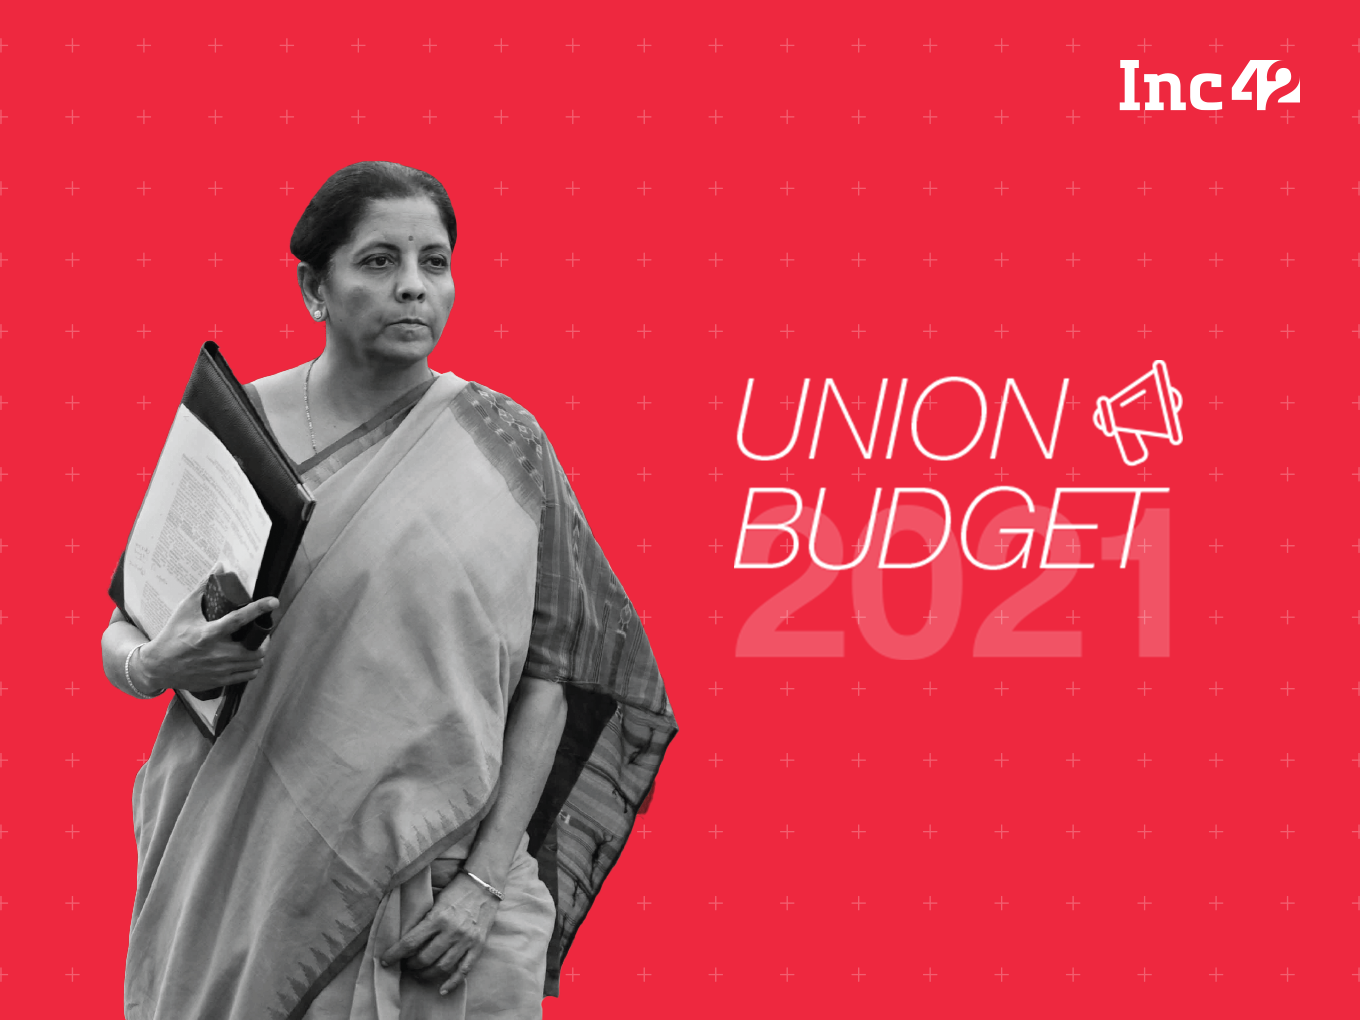 Union Budget 2021: The Big FDI Push For InsurTech Startups